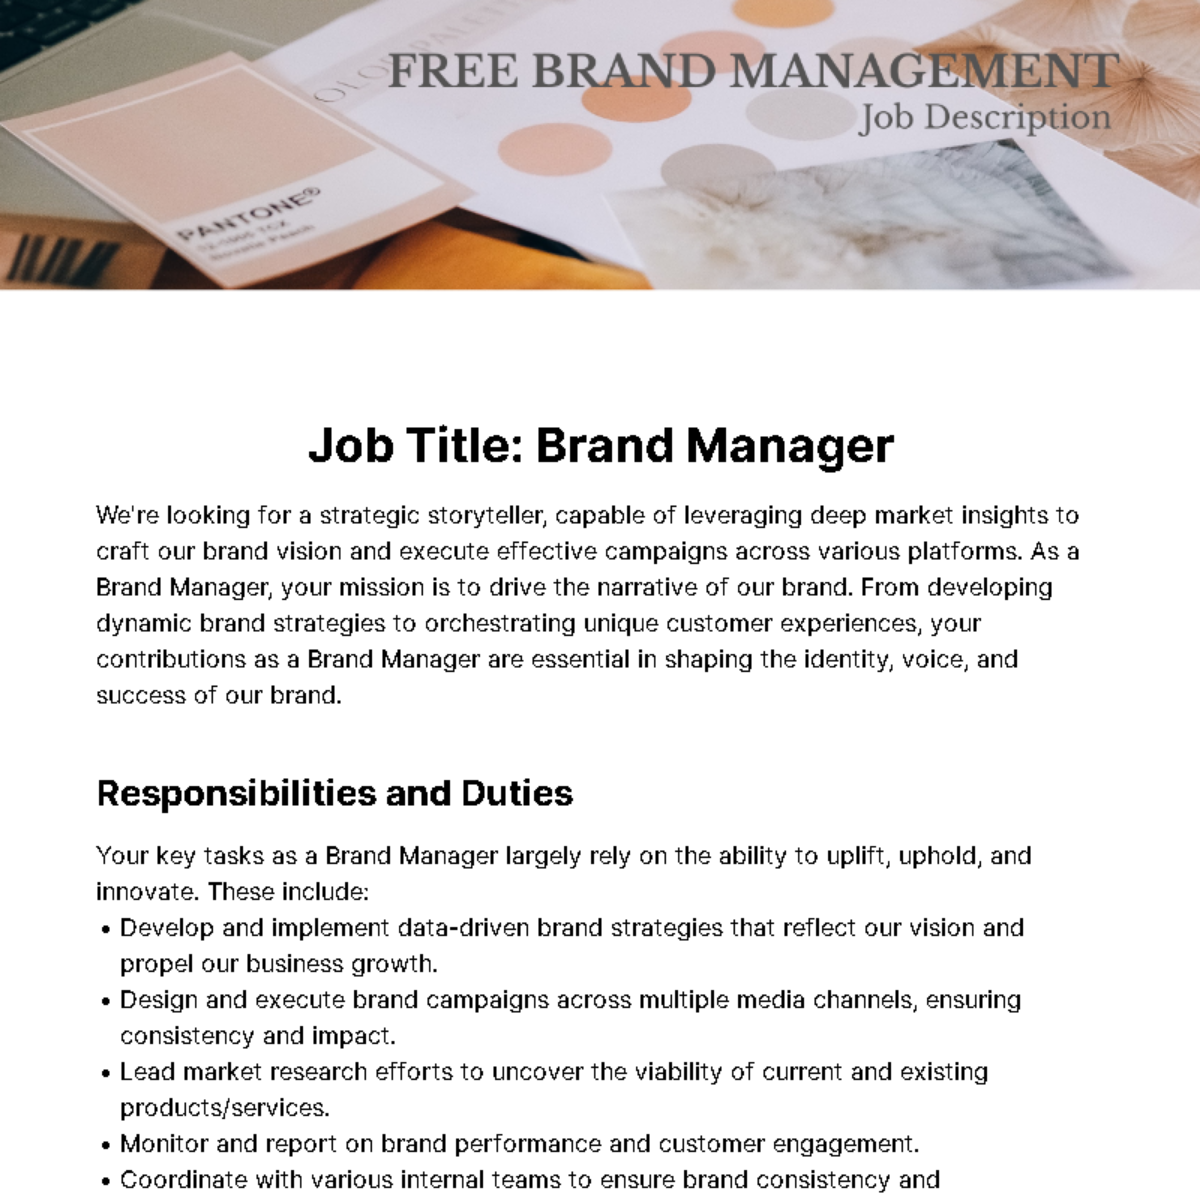 Brand Management Job Description Template